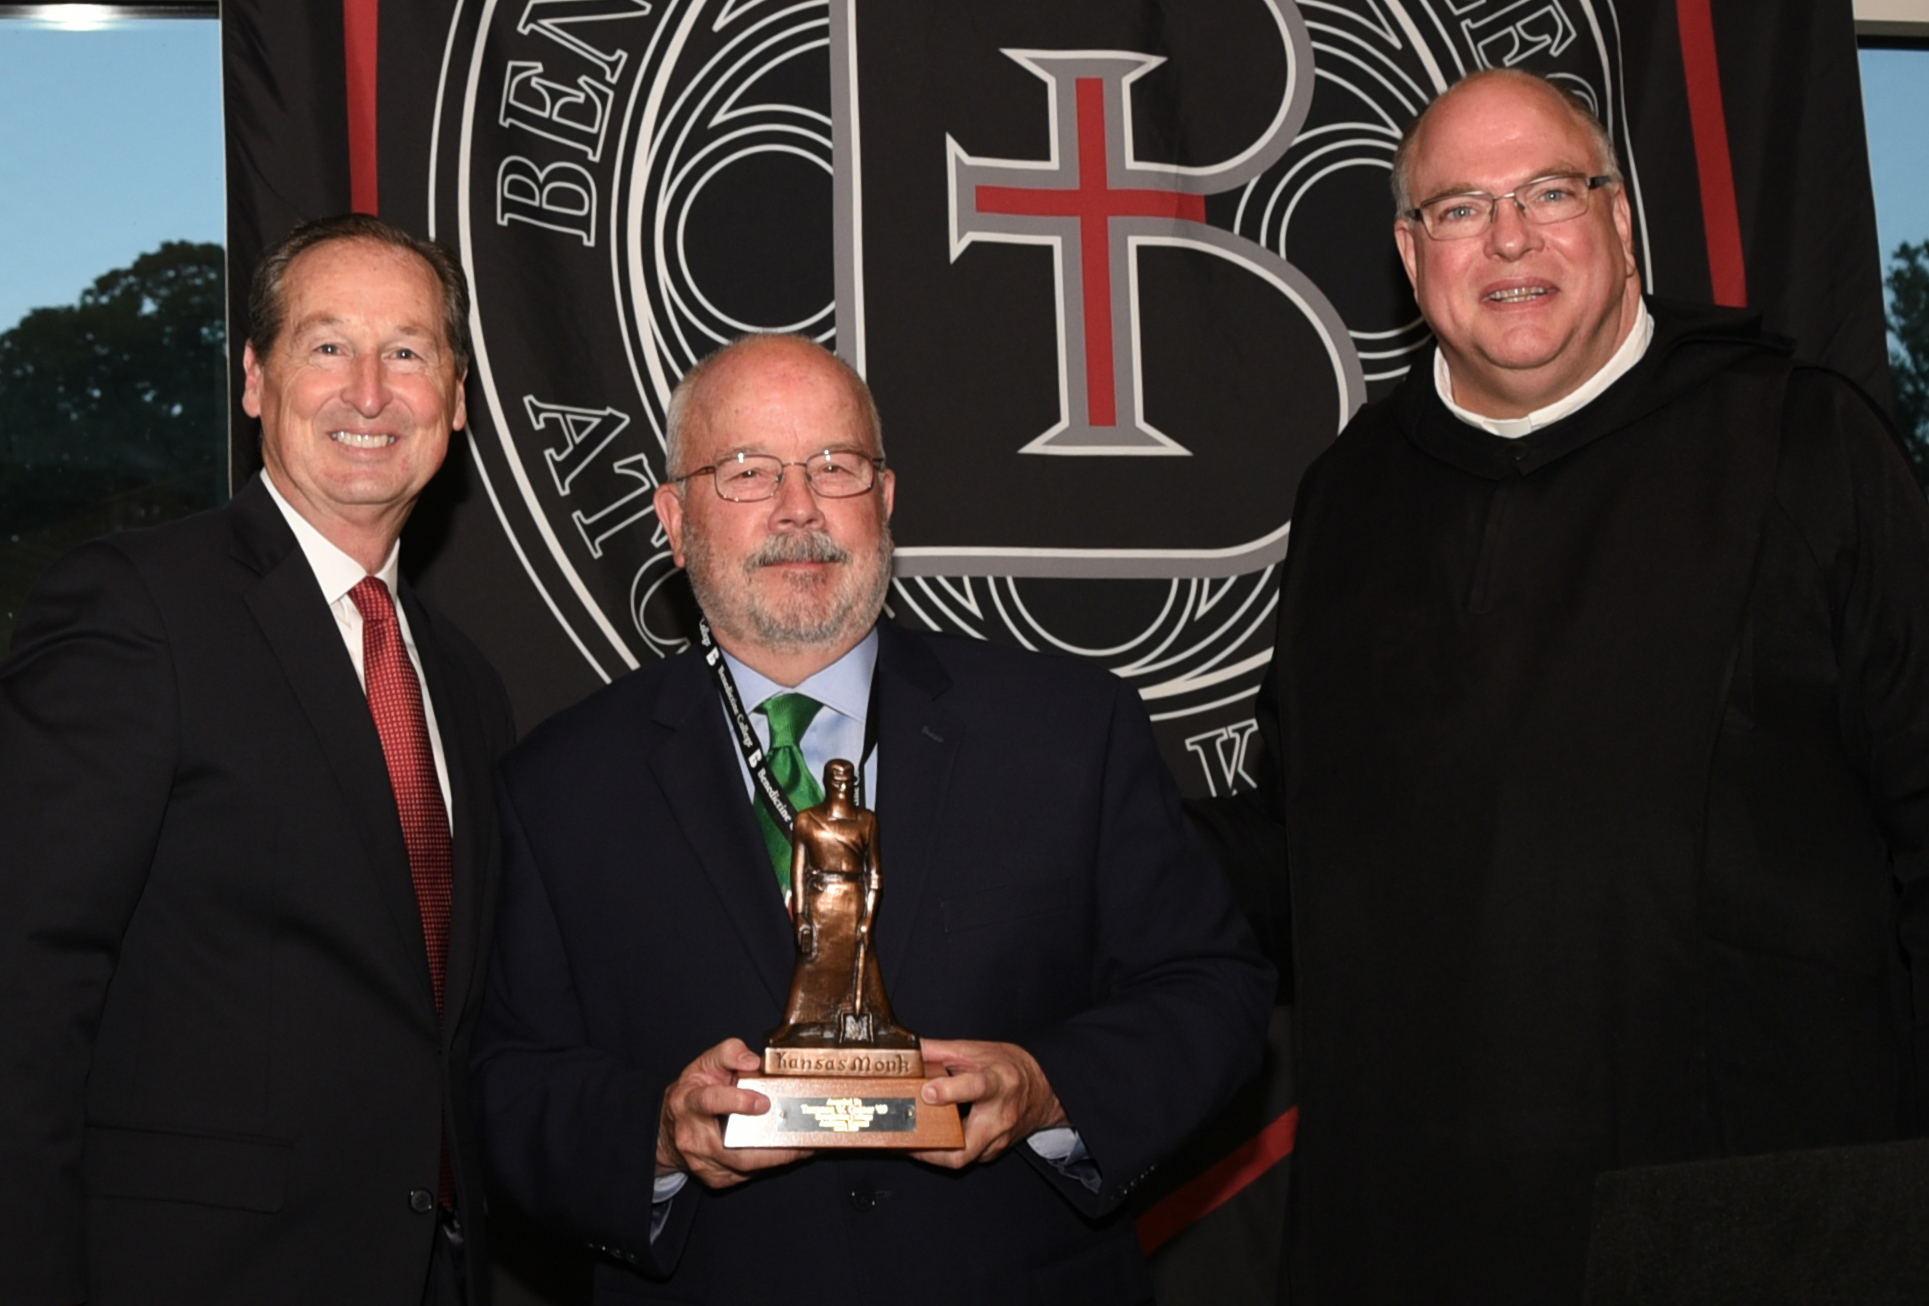 President Stephen Minnis, Terrance Gainer, Fr. Meinrad Miller